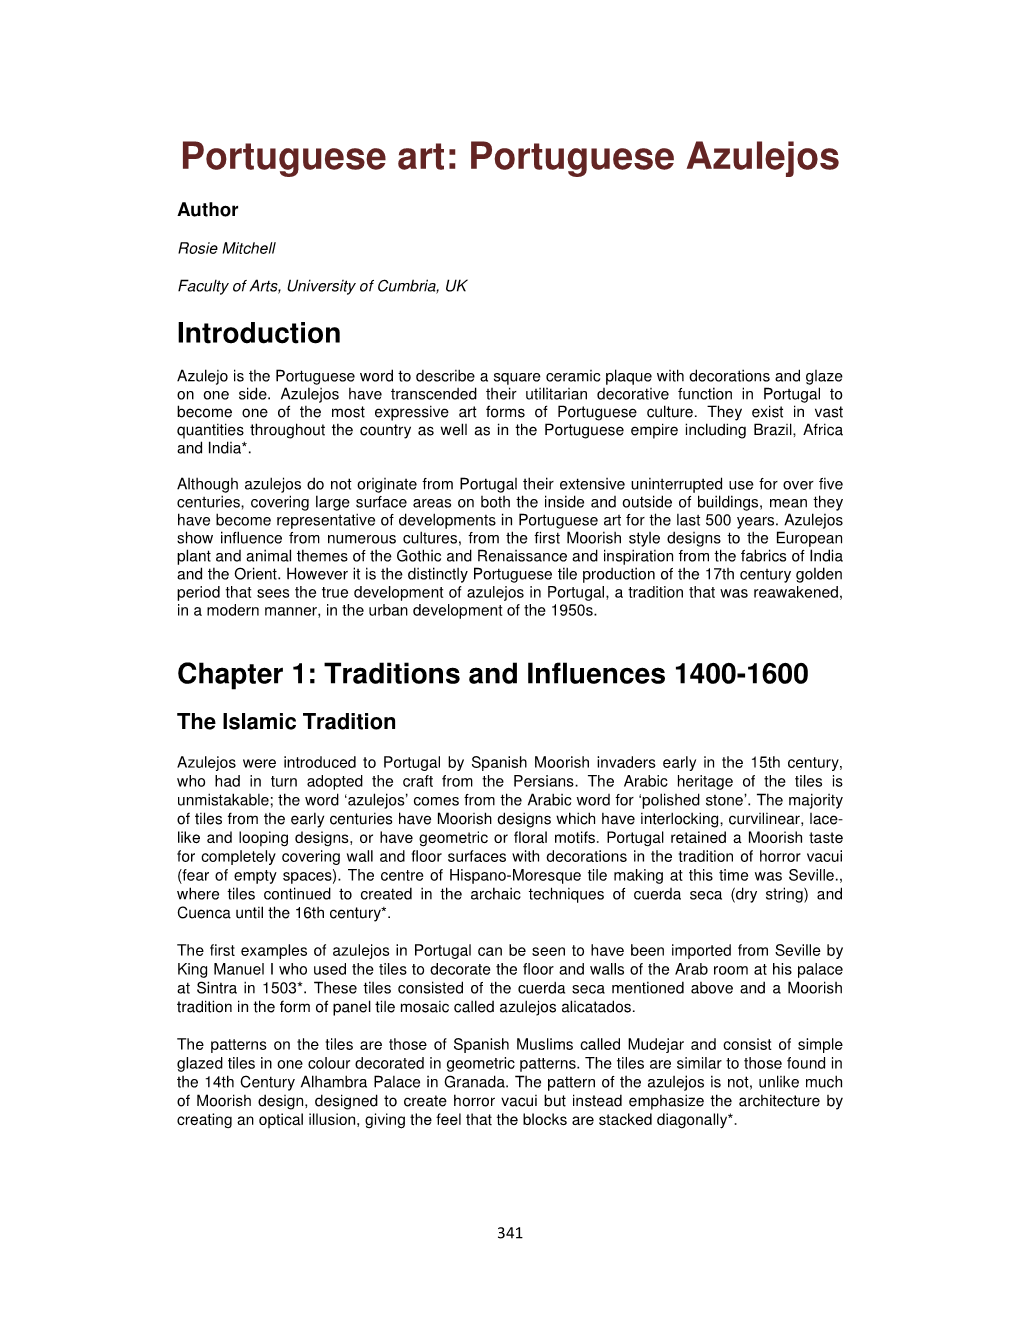 Portuguese Art: Portuguese Azulejos